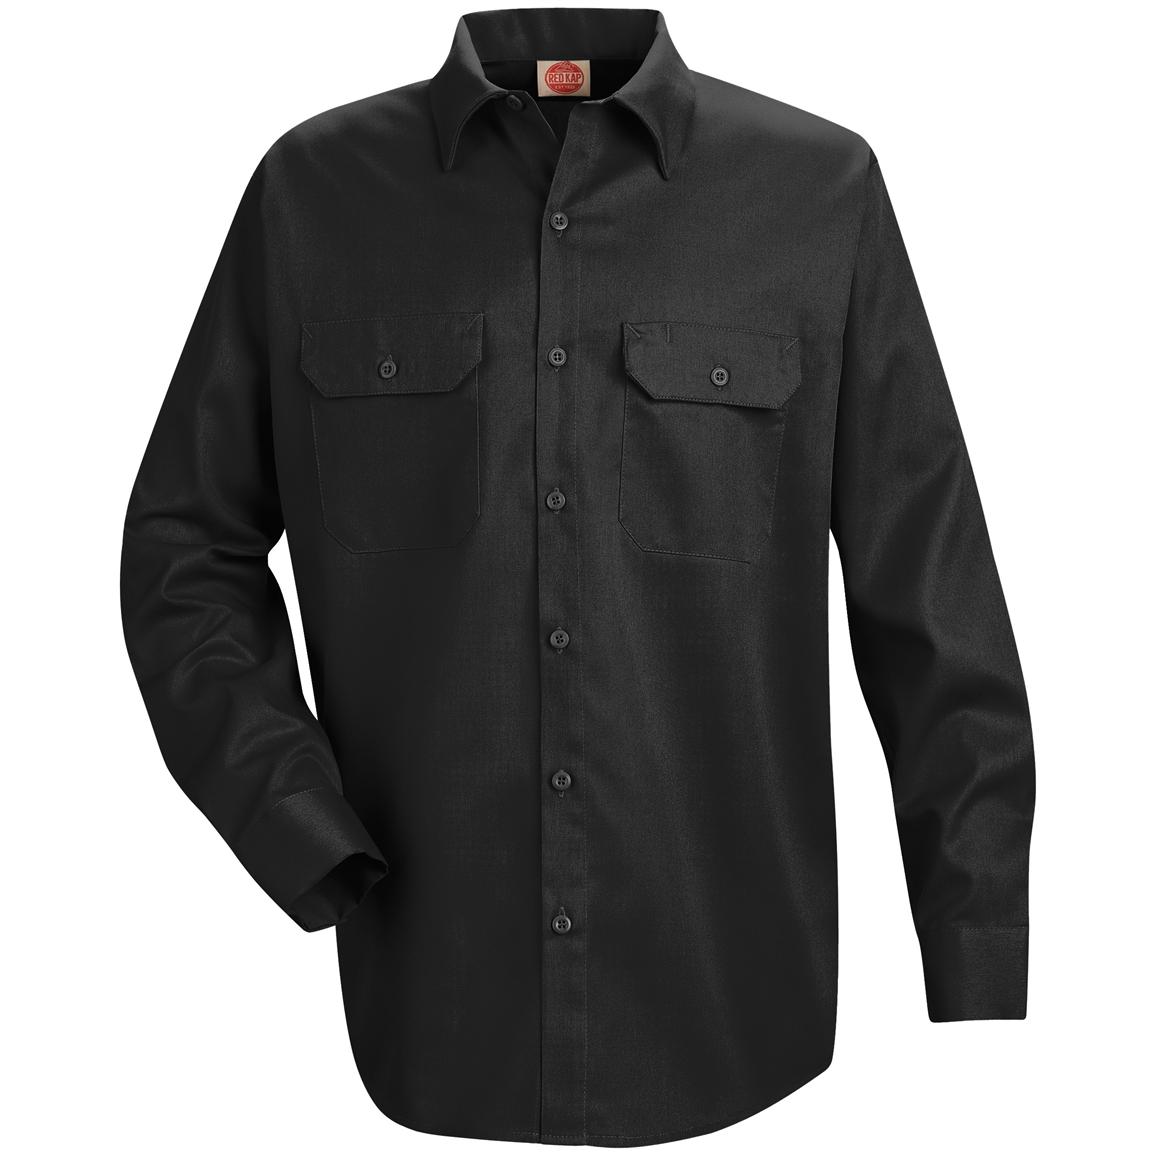 Black Uniform Shirt 3